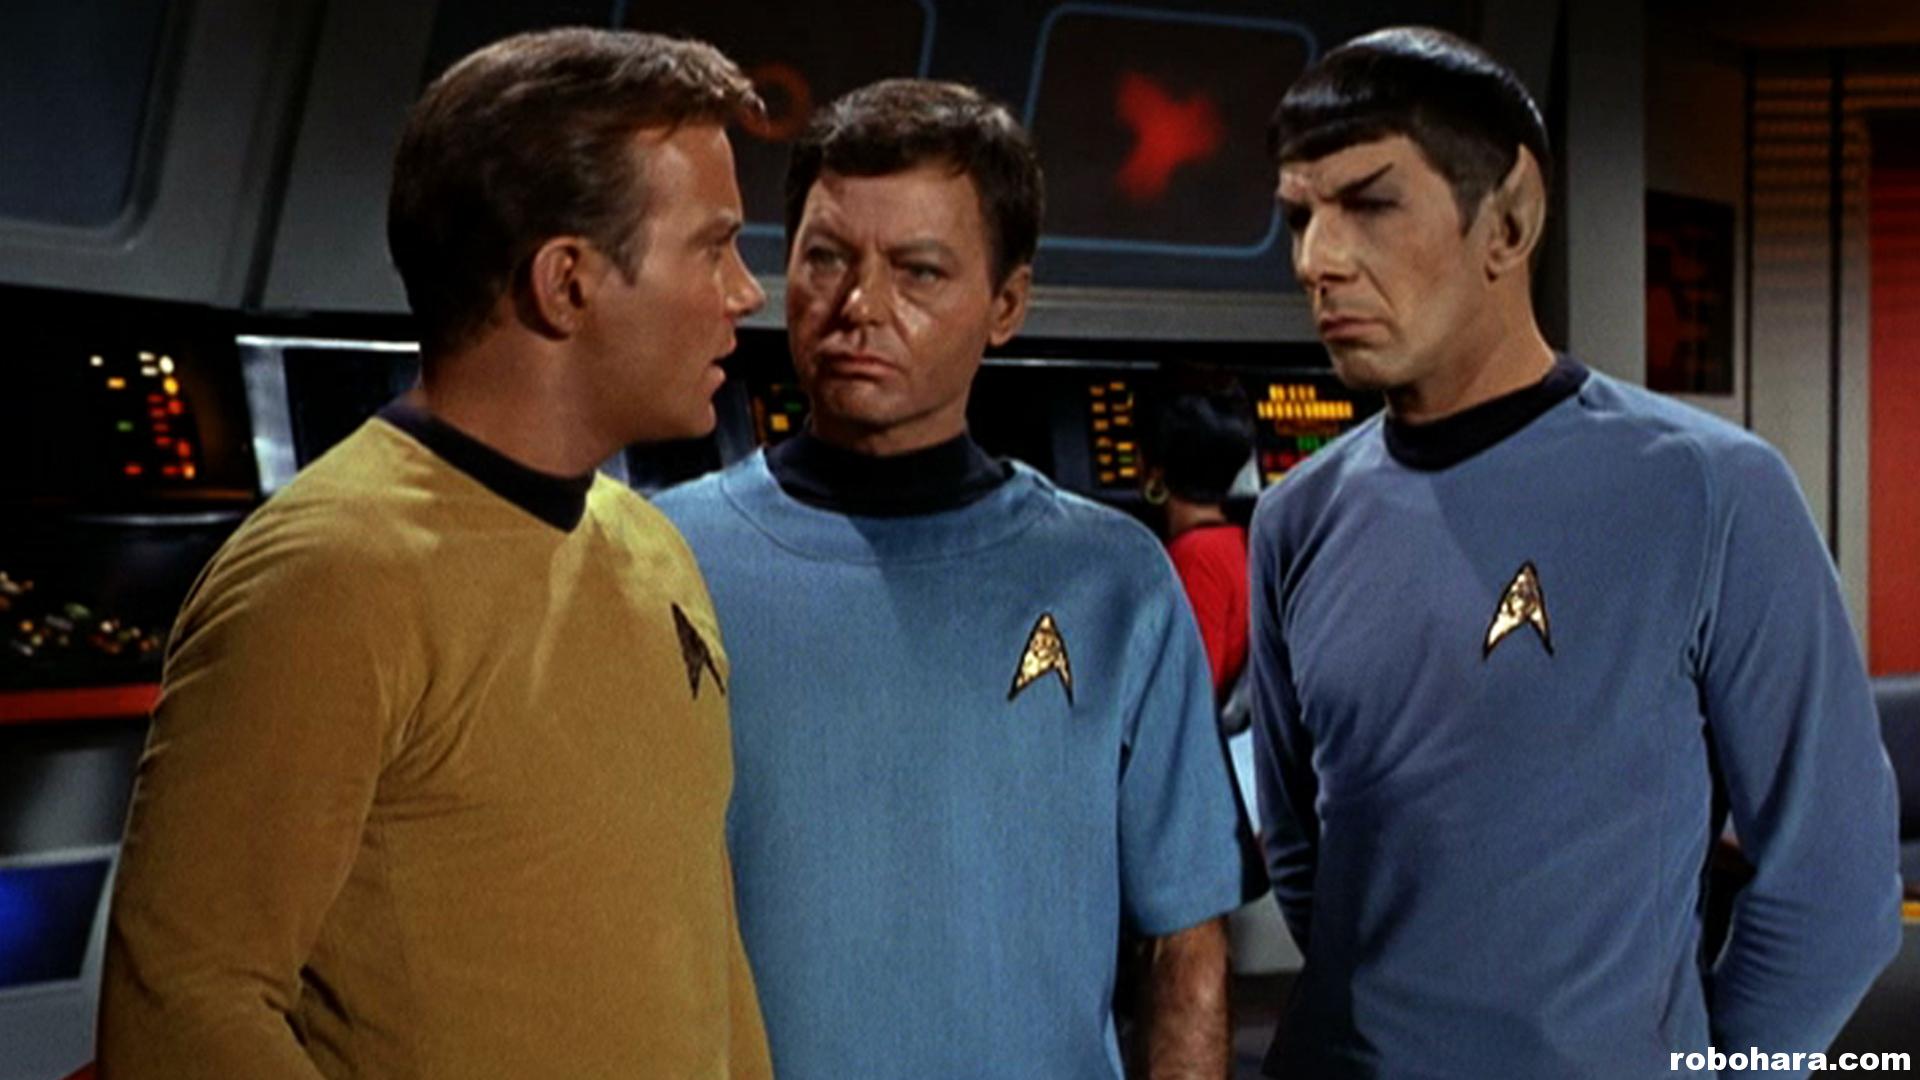 Star Trek the Original Series with Captain Kirk, Dr. Bones McCoy, and Spock